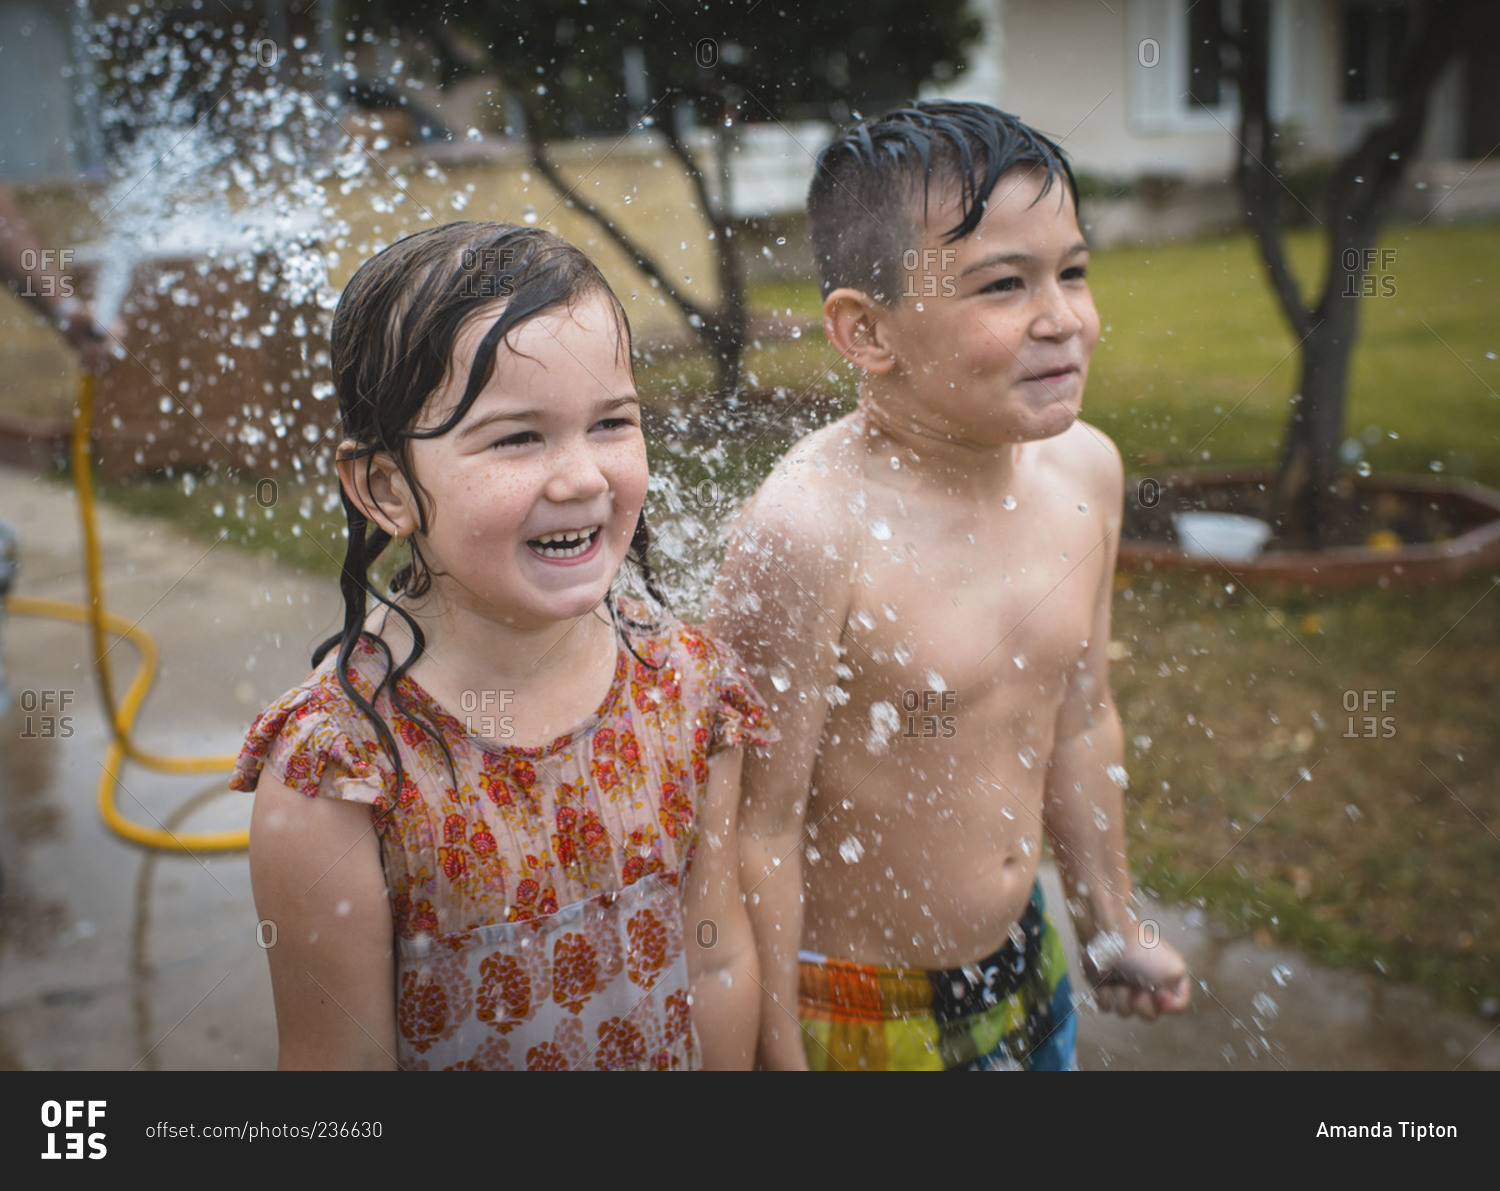 Children being splashed by a hose